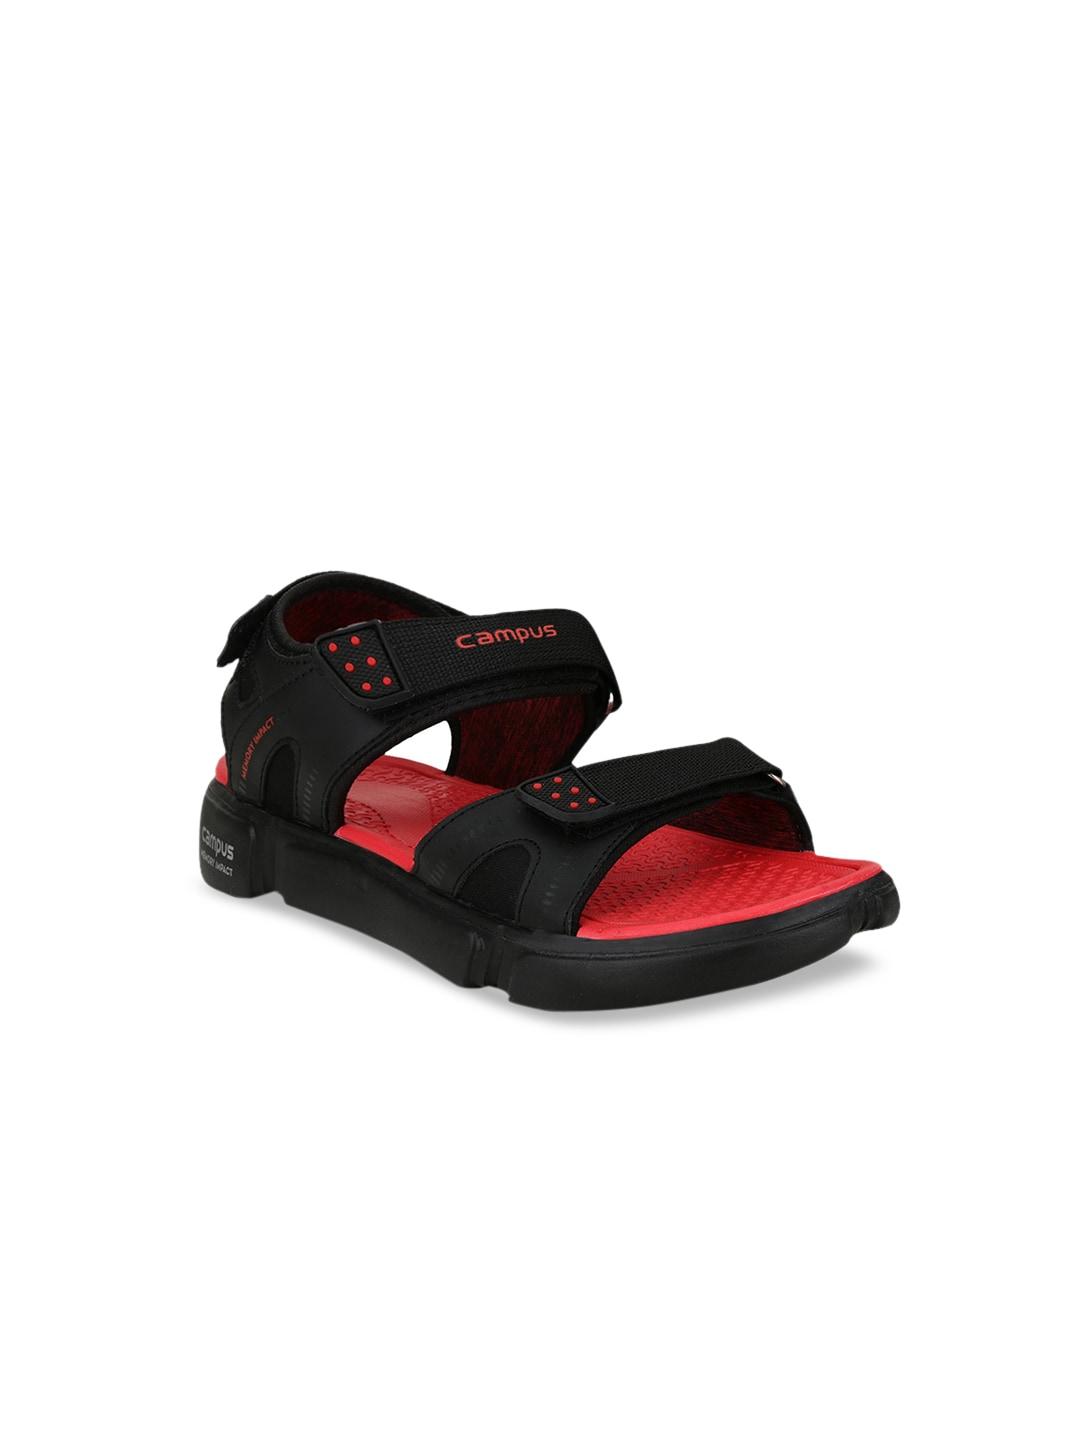 campus men black & red sports sandals